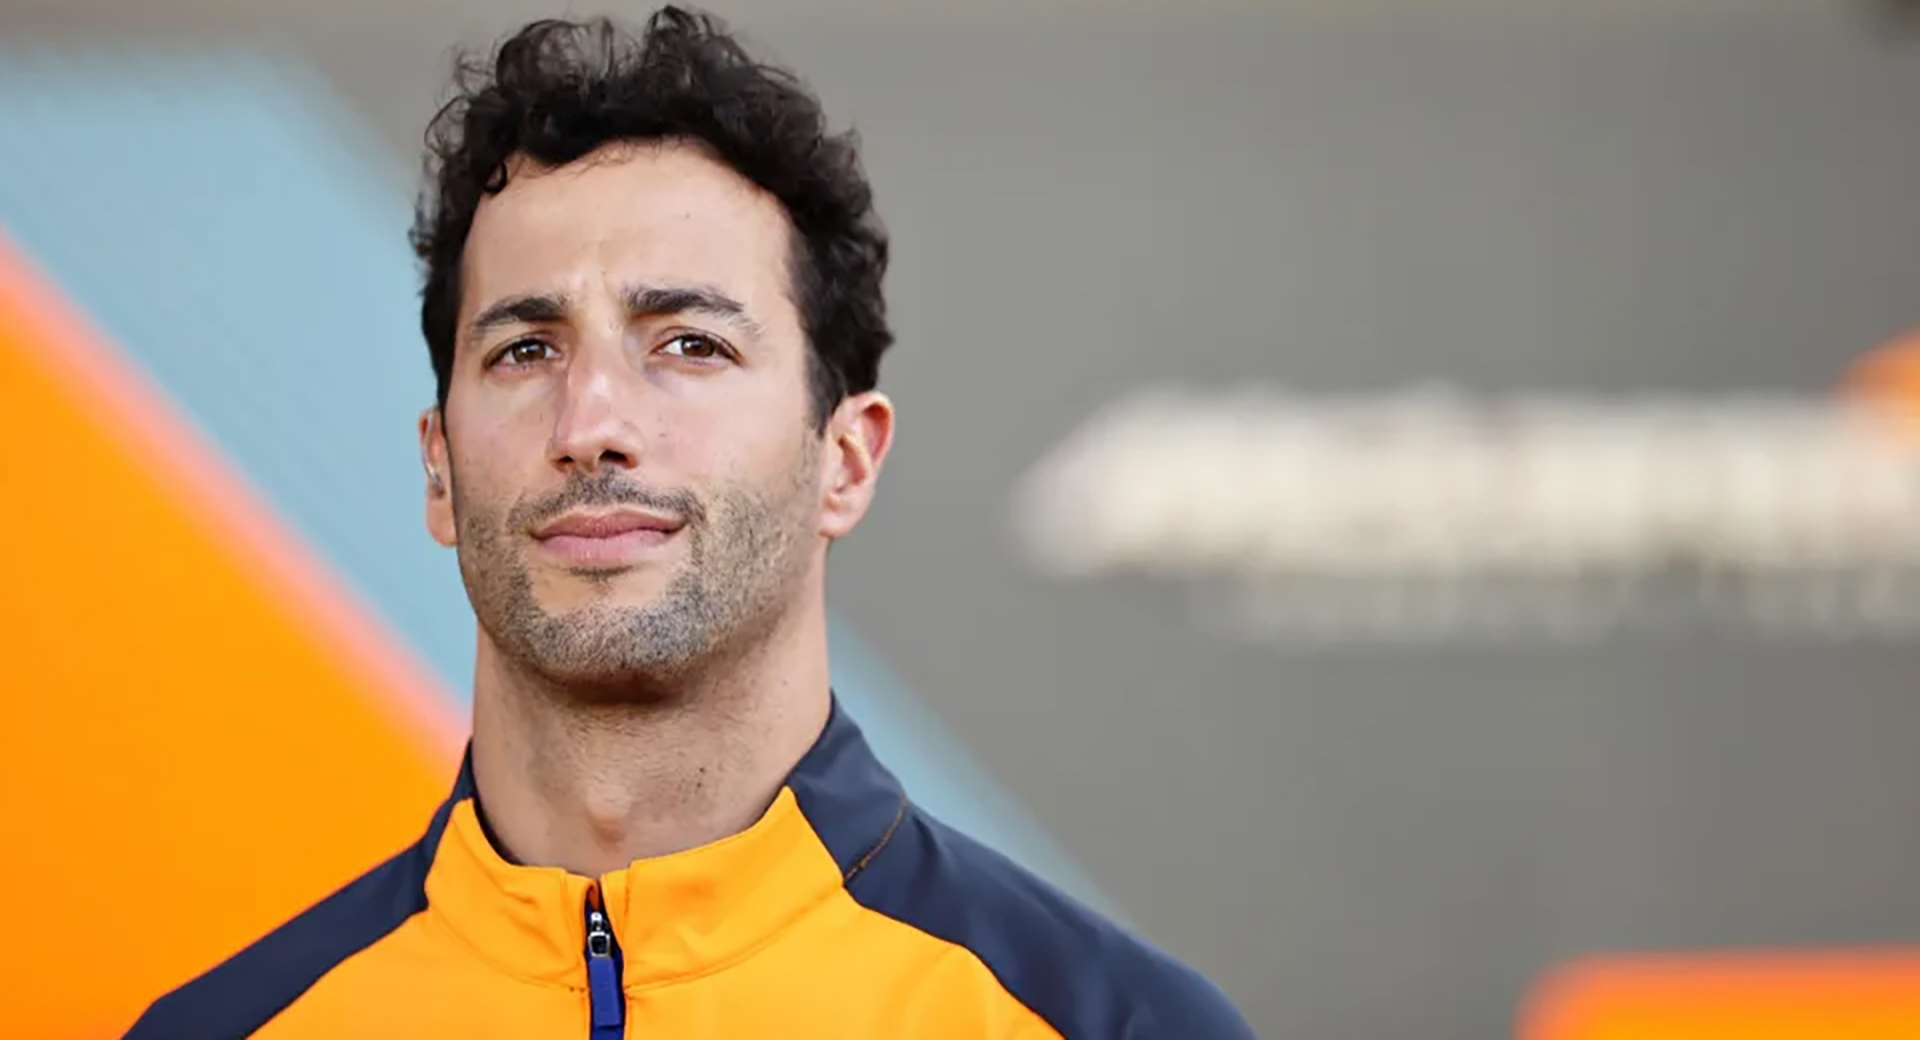 Daniel Ricciardo quittera McLaren Racing après la saison 2022 de F1